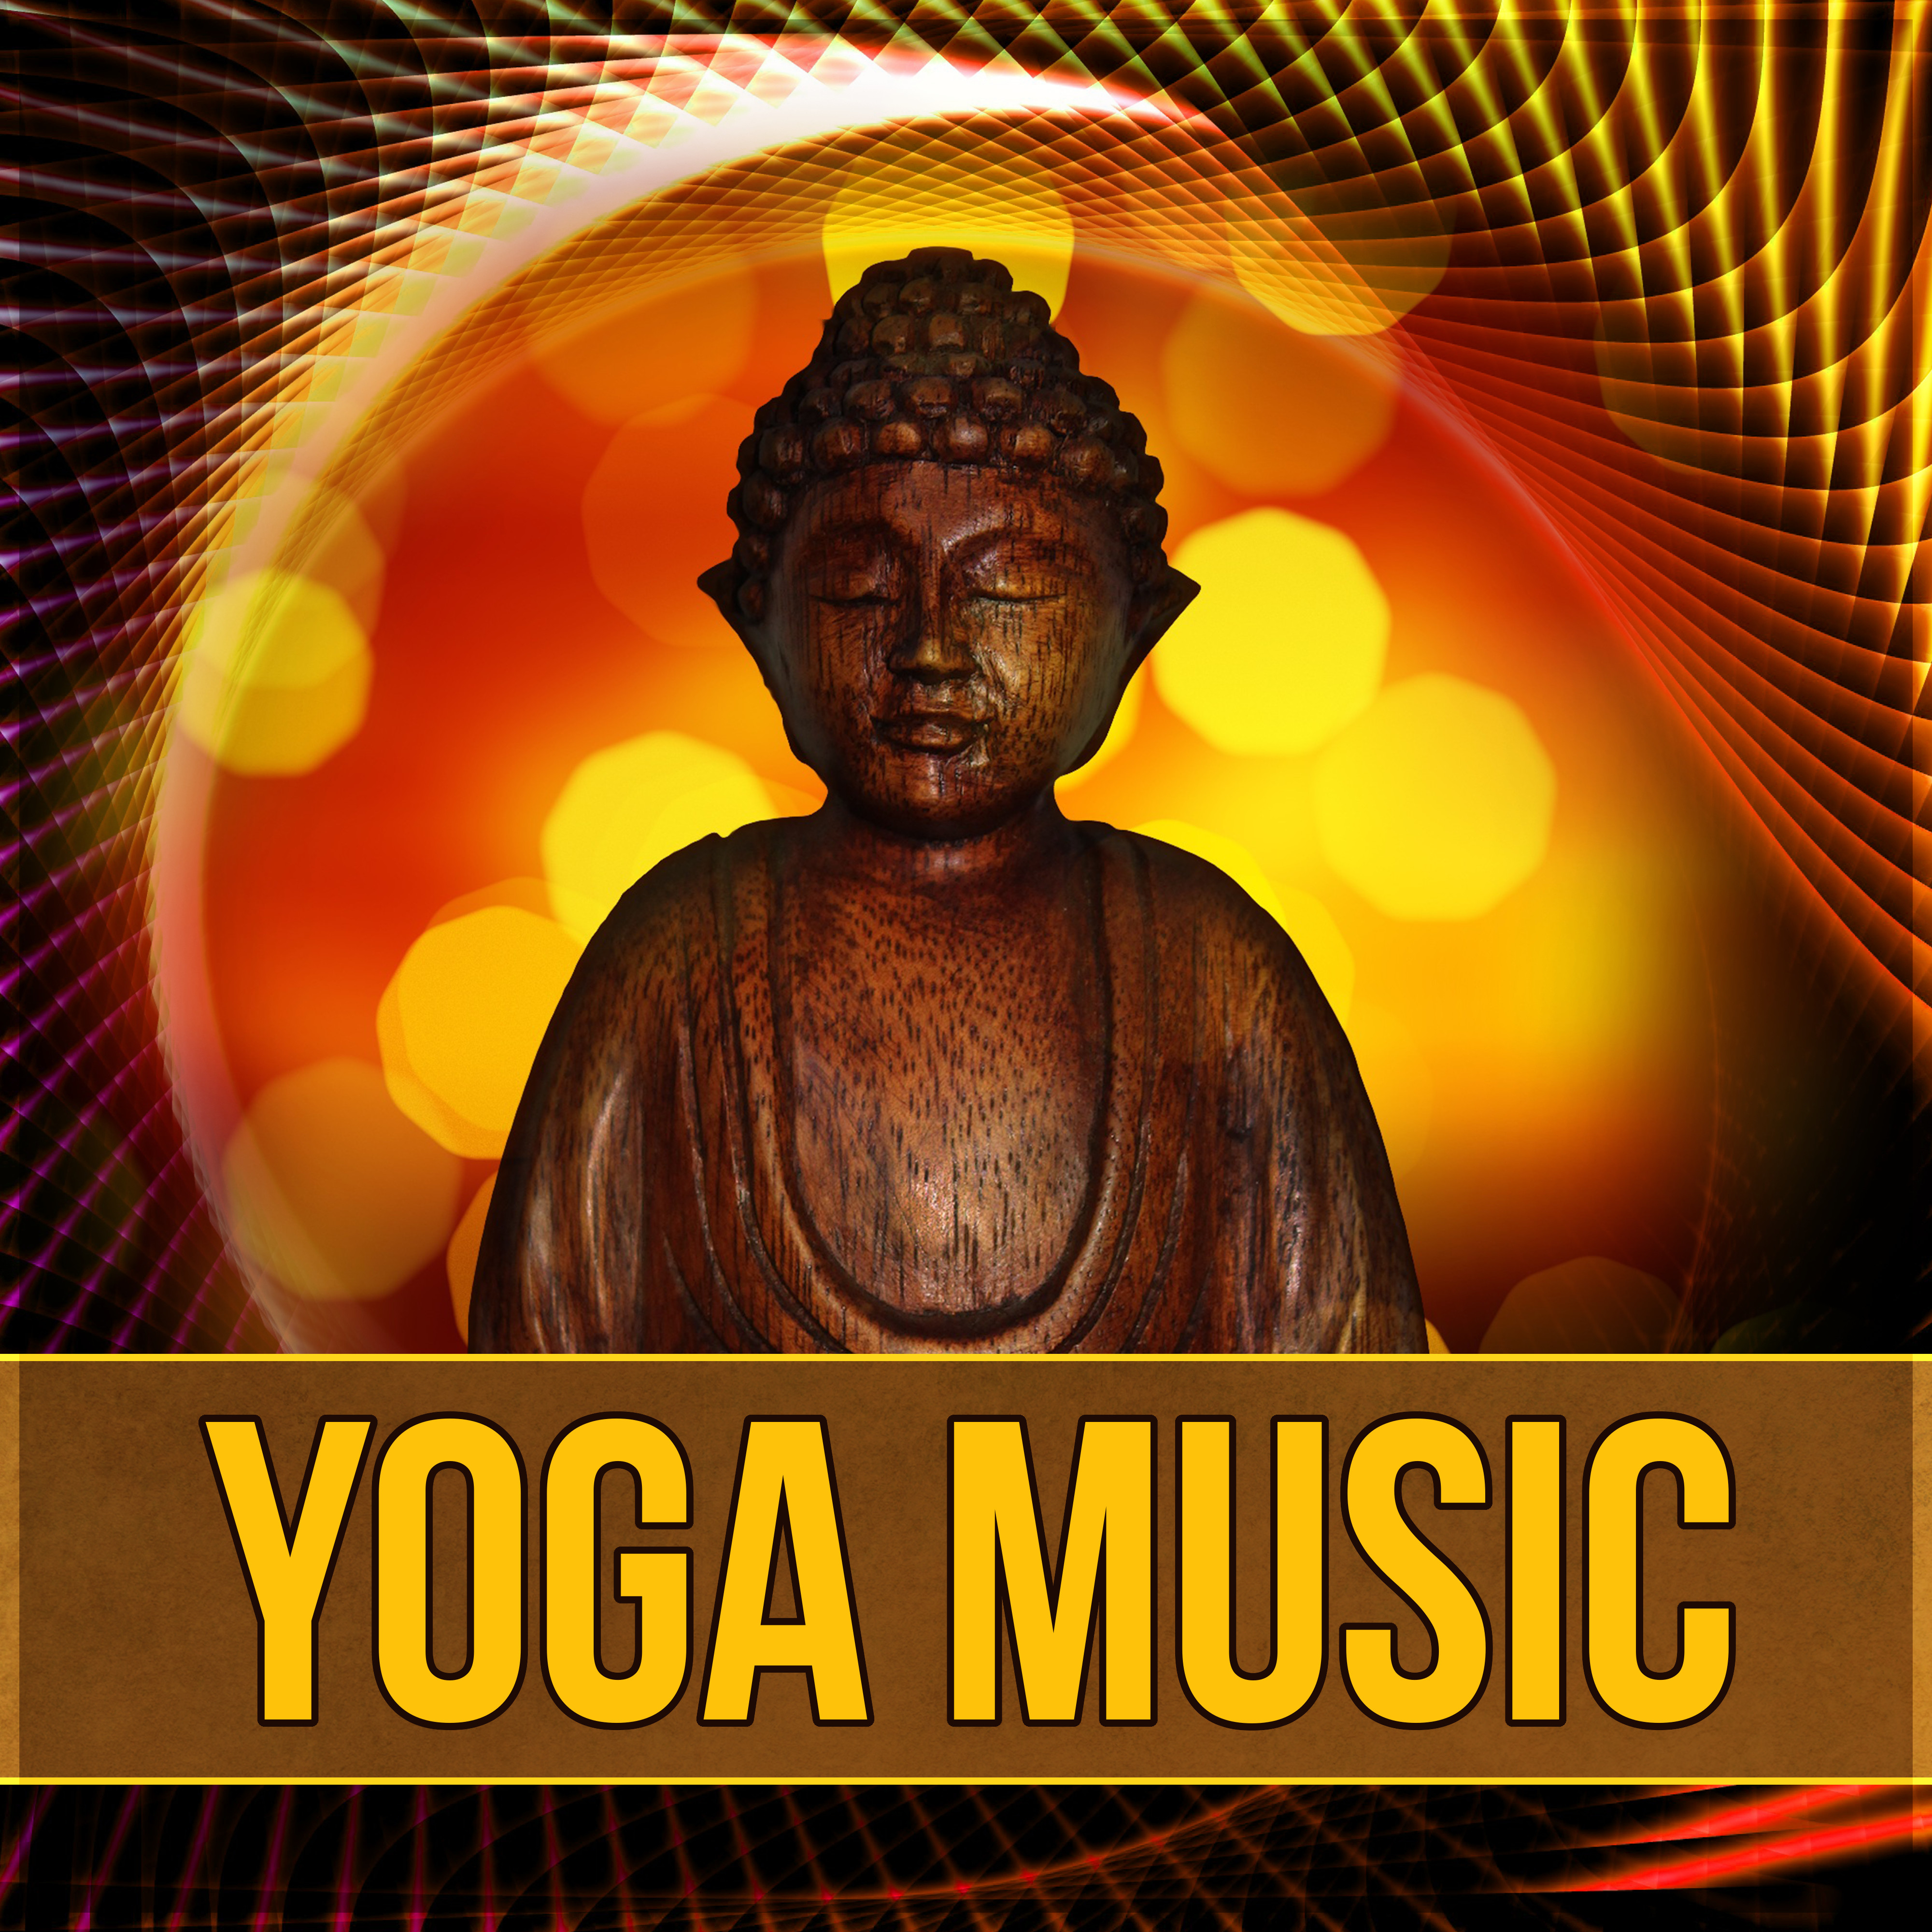 Yoga Music – Chakra Healing, Pranayama, Hatha Yoga, Mantras, Mindfulness, Relaxation, Sleep Meditation, Massage, Wellness, Spirituality,